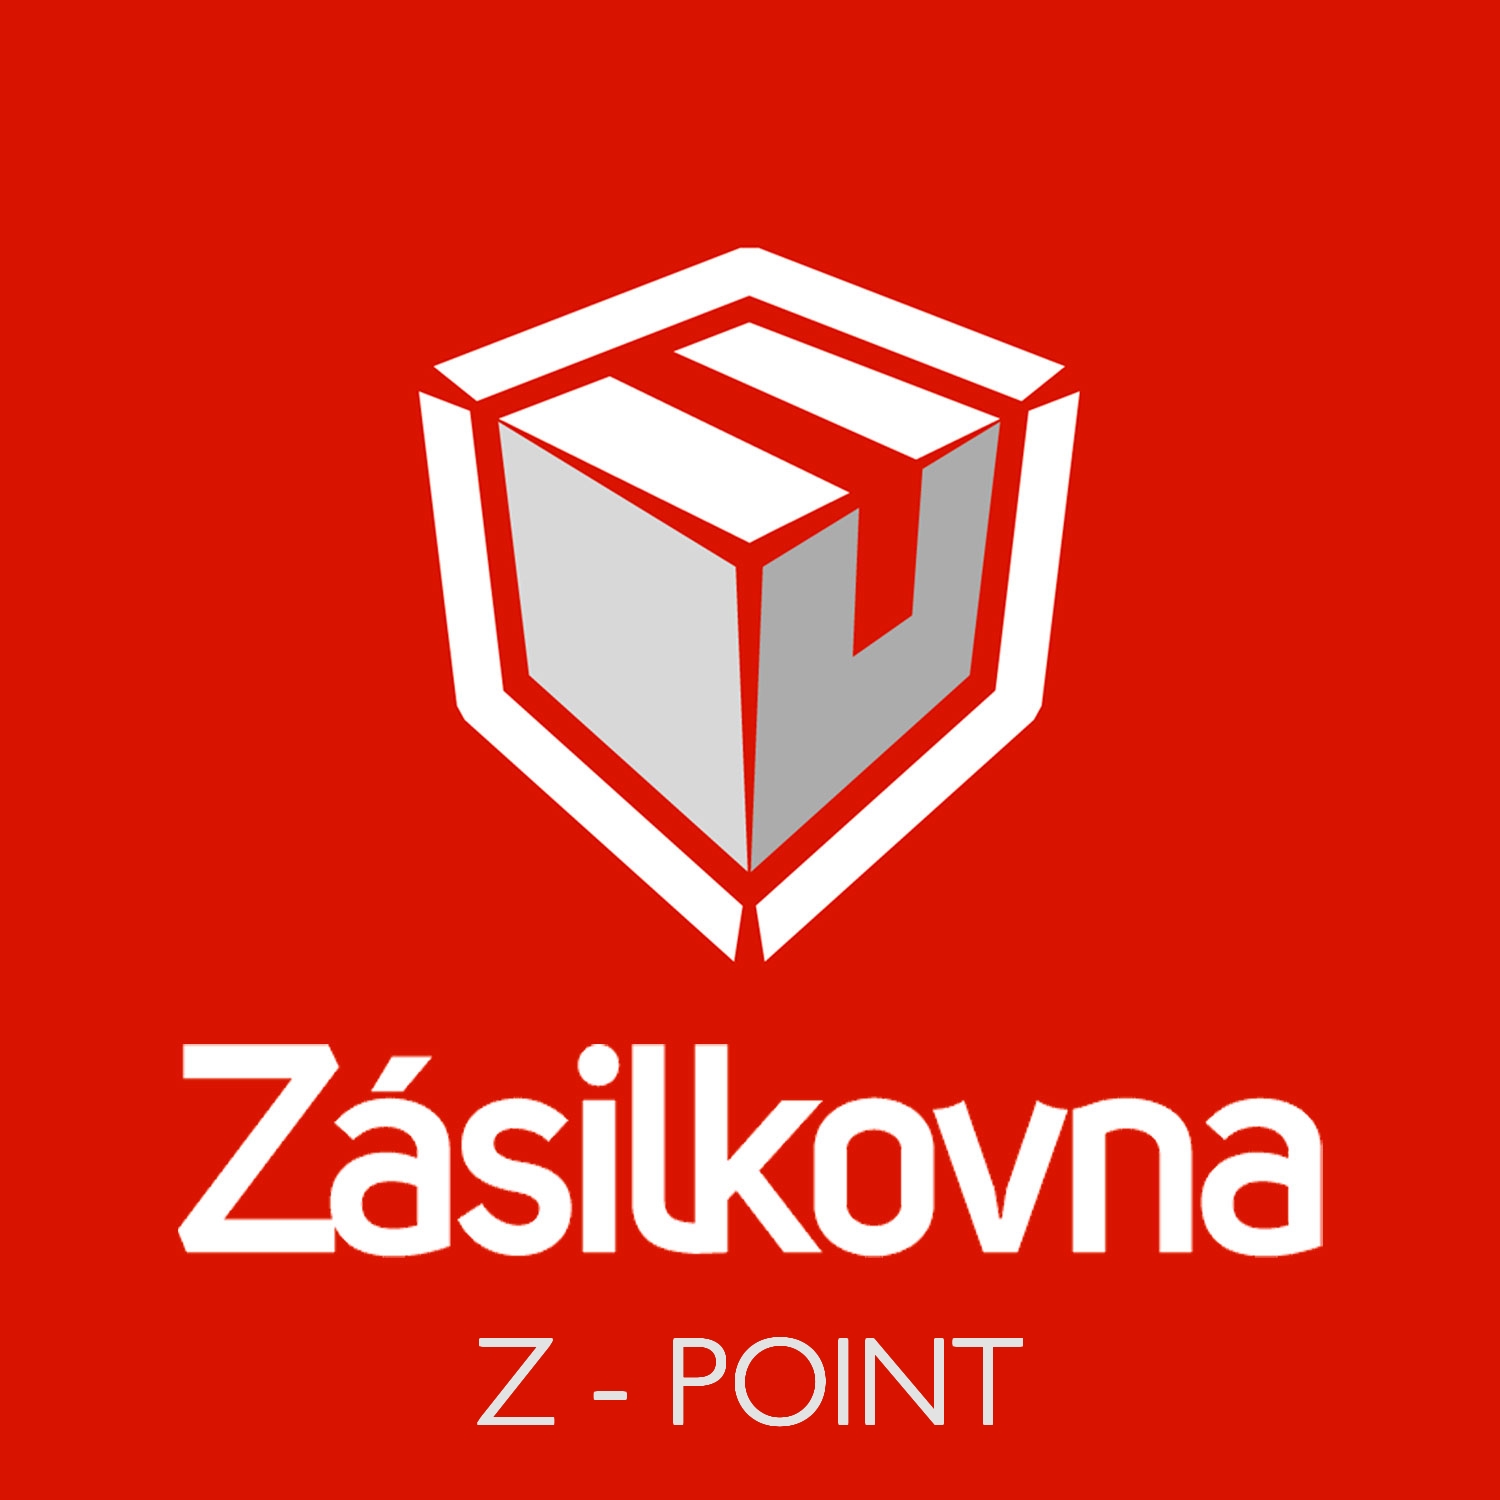 Zásilkovna-logo-čtverec_zPOINT